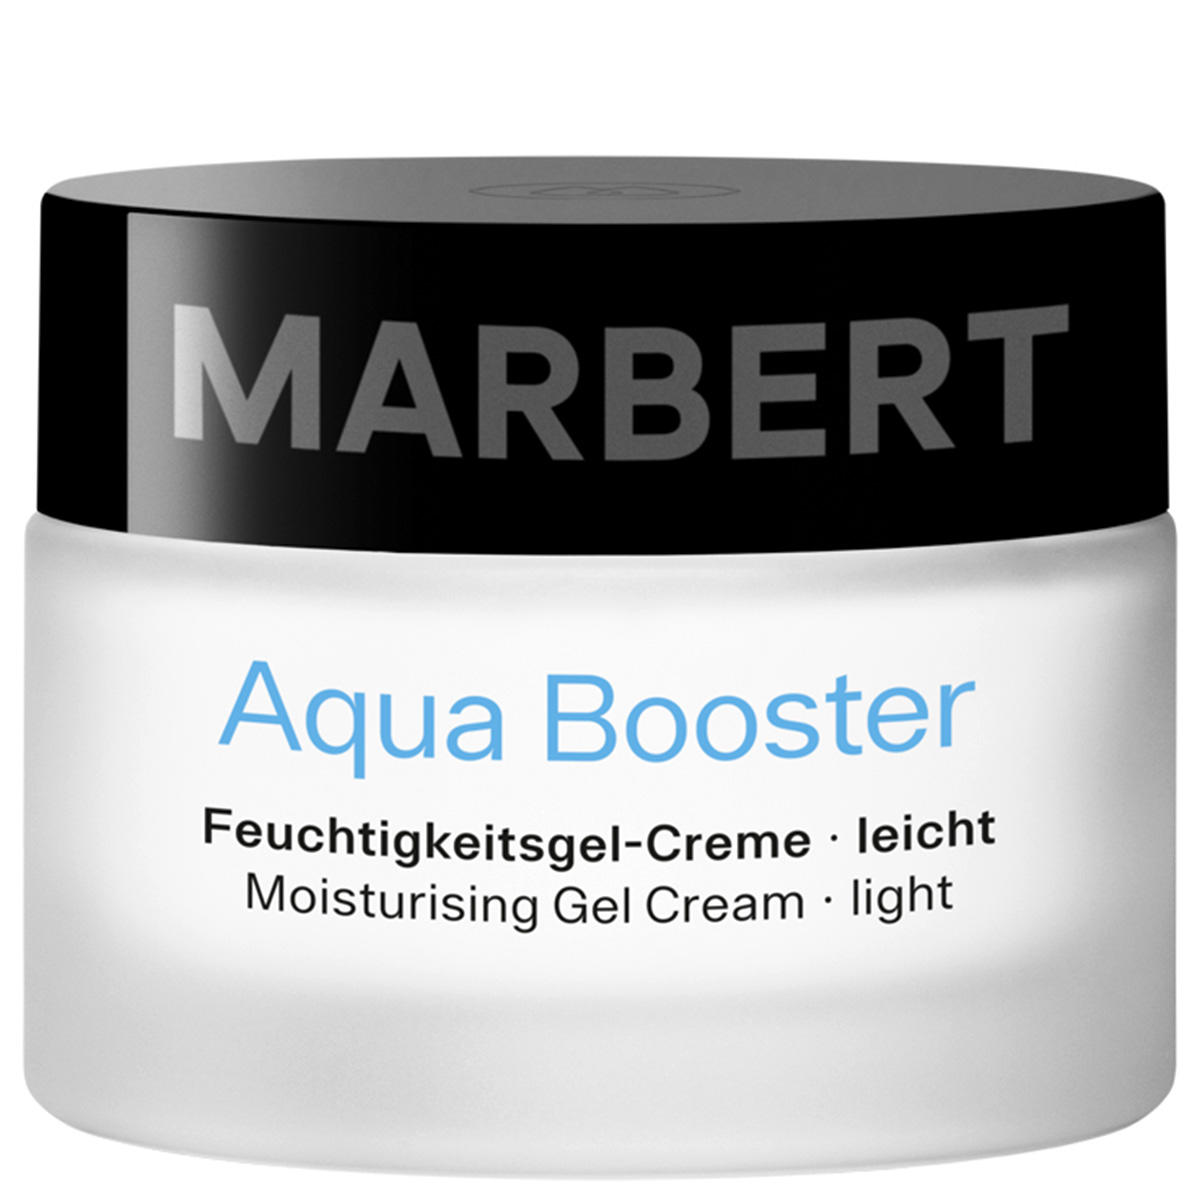 Marbert Aqua Booster Moisturizing gel cream light 50 ml - 1